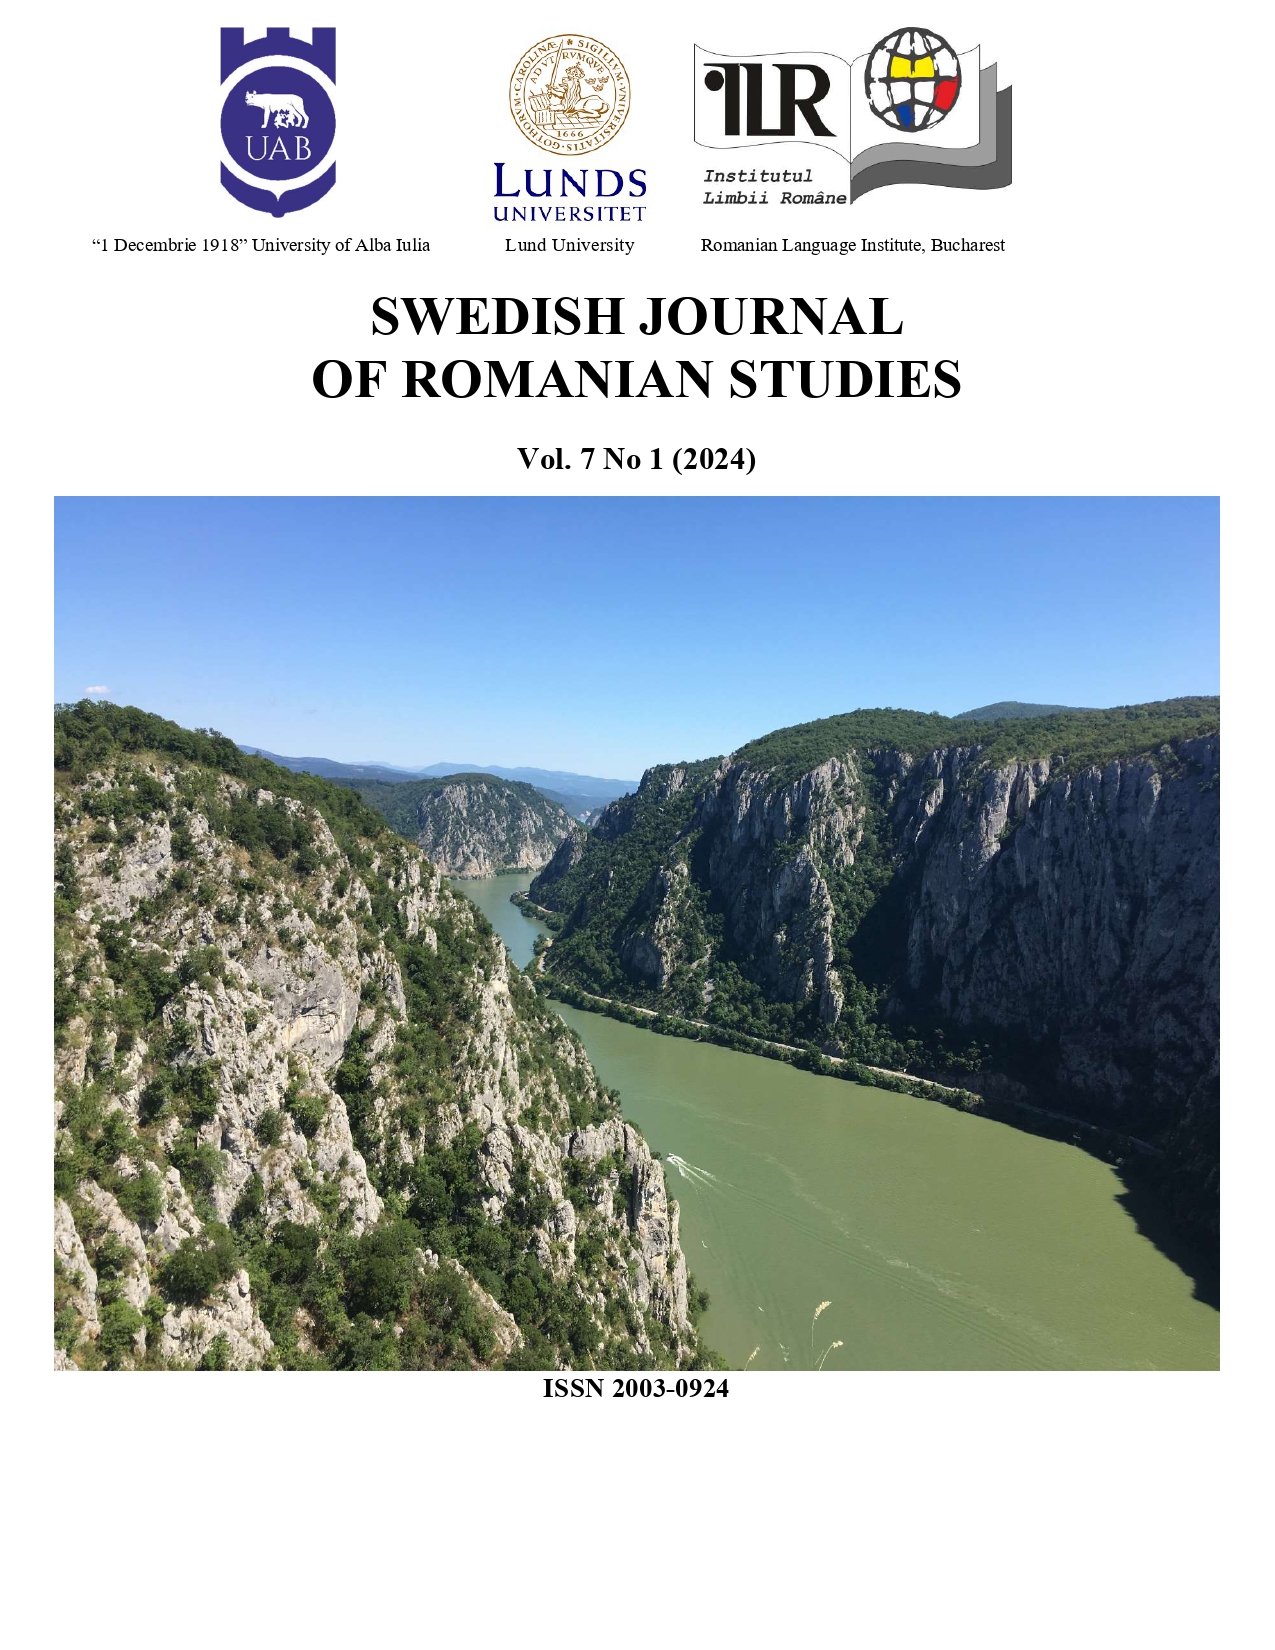 					View Vol. 7 No. 1 (2024): Swedish Journal of Romanian Studies
				